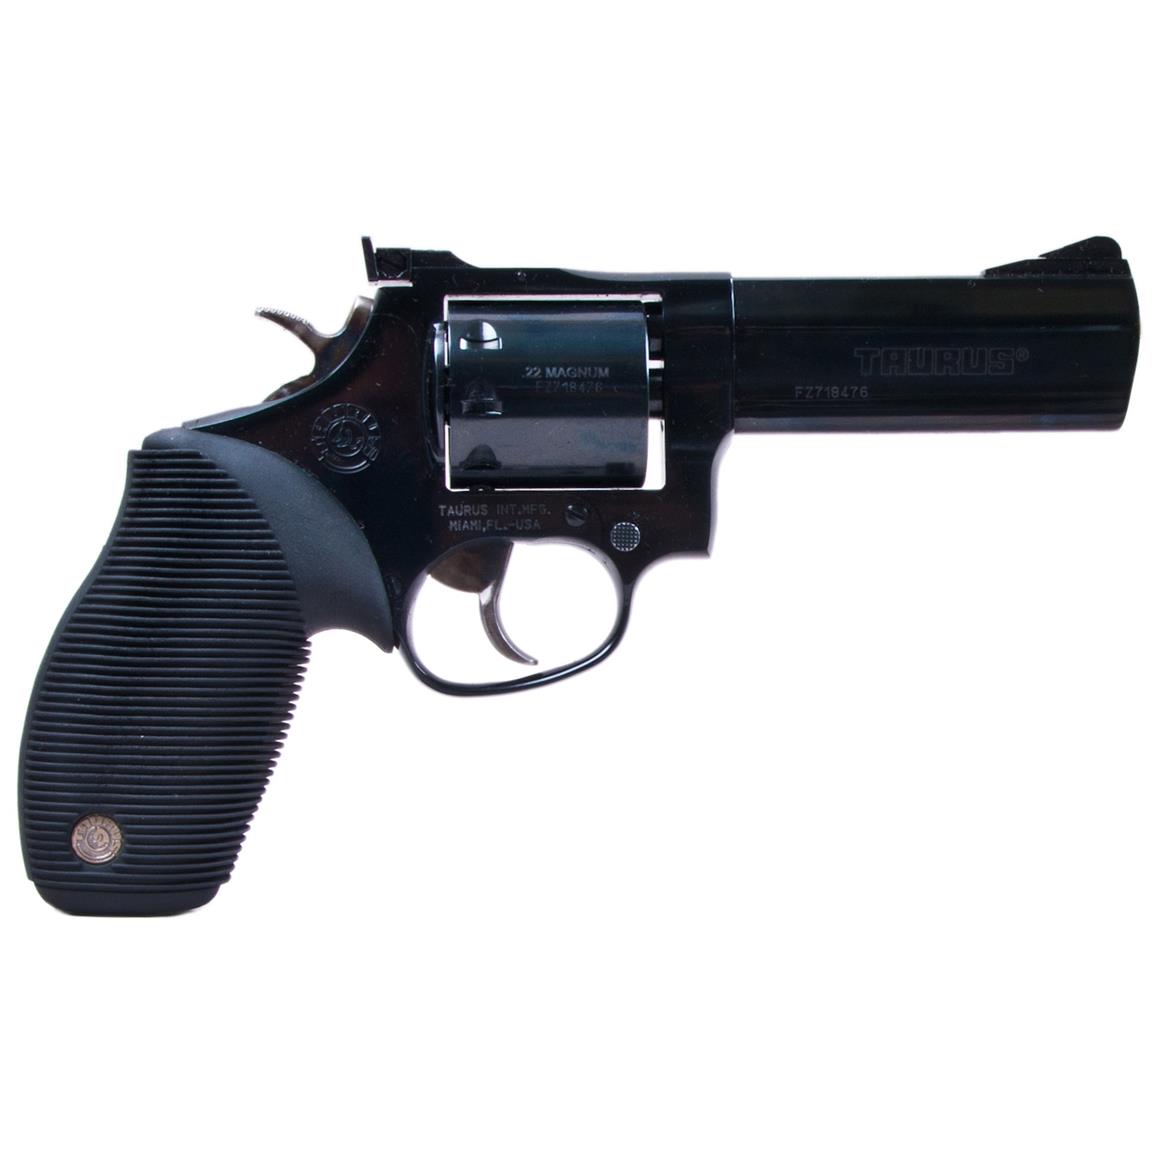 Taurus Tracker 992, Revolver, .22LR/.22 Magnum, Rimfire, 4" Barrel, 9 Rounds